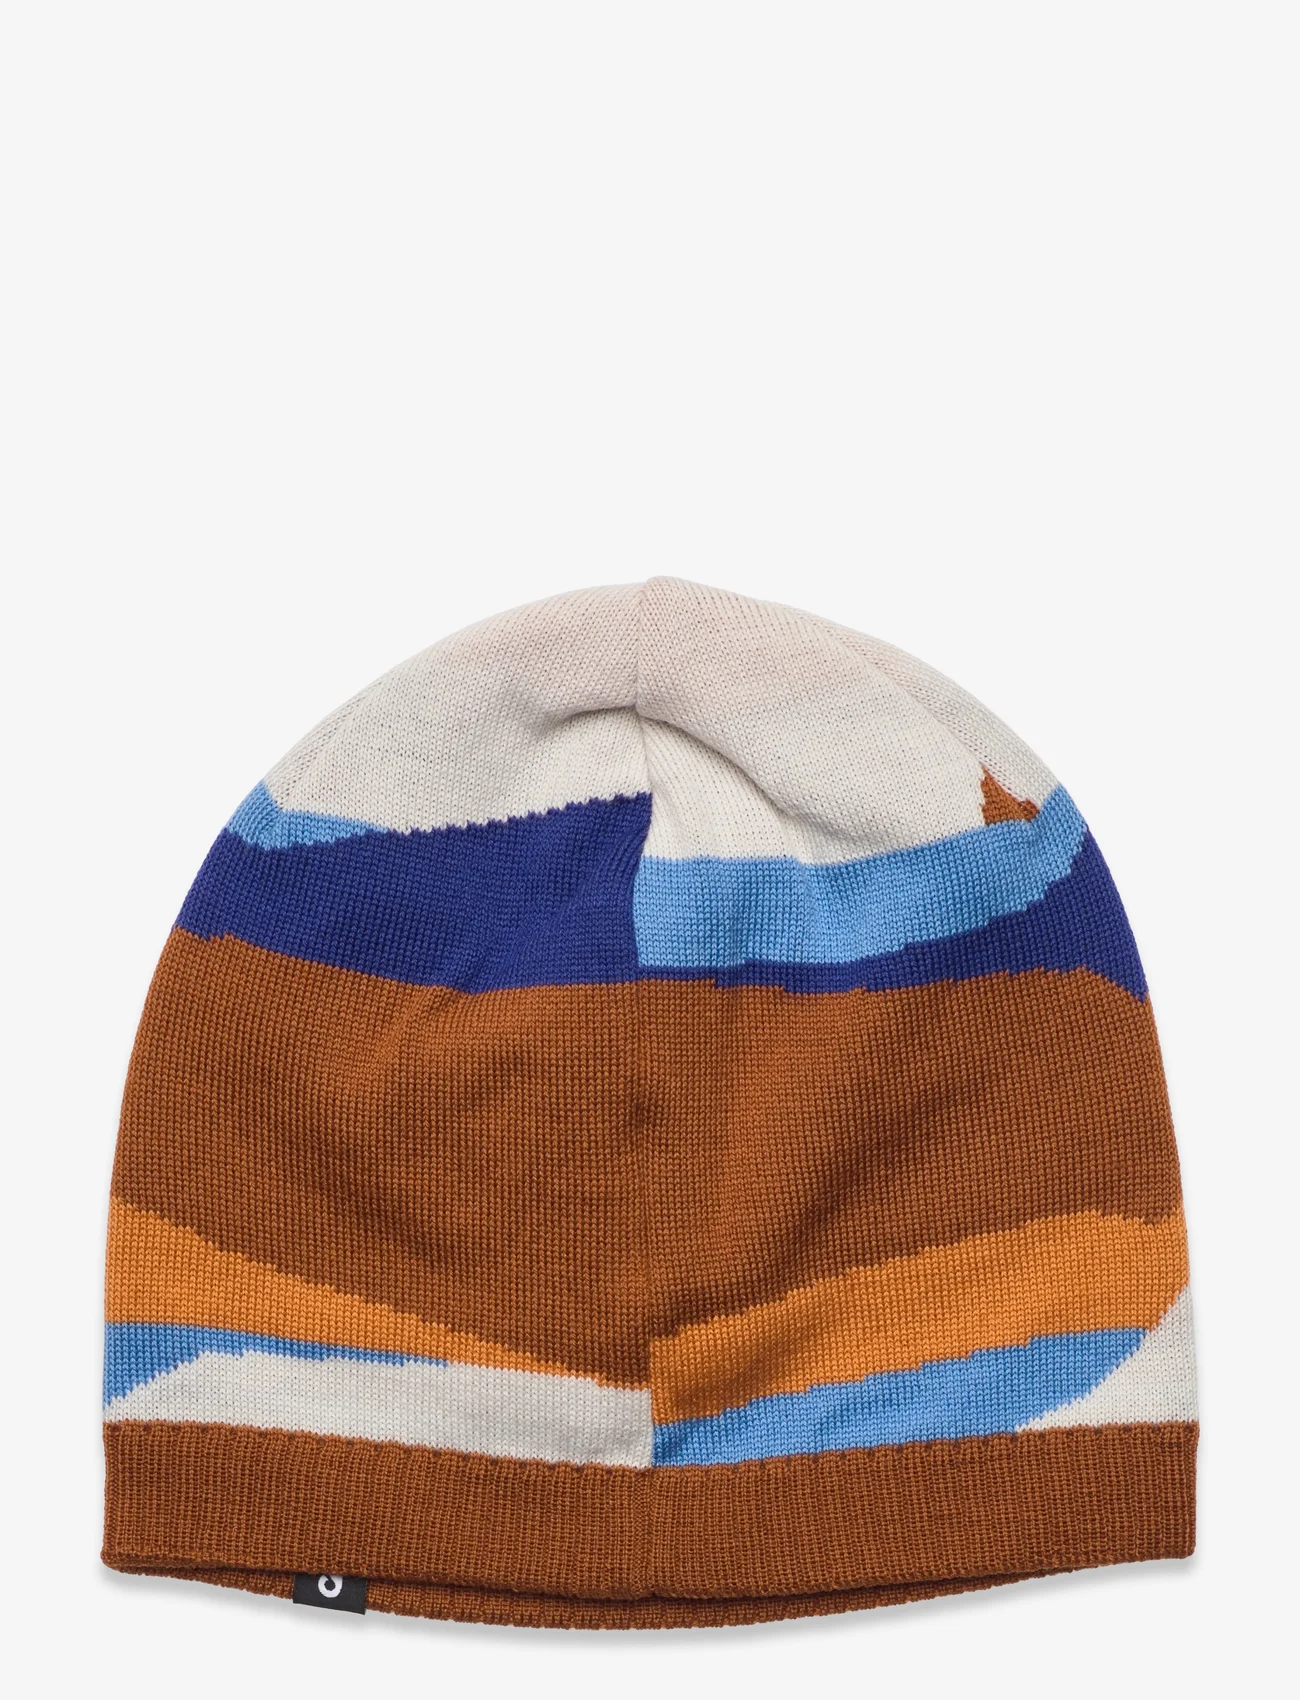 Reima - Beanie, Kuviot - winter hats - twilight blue - 1